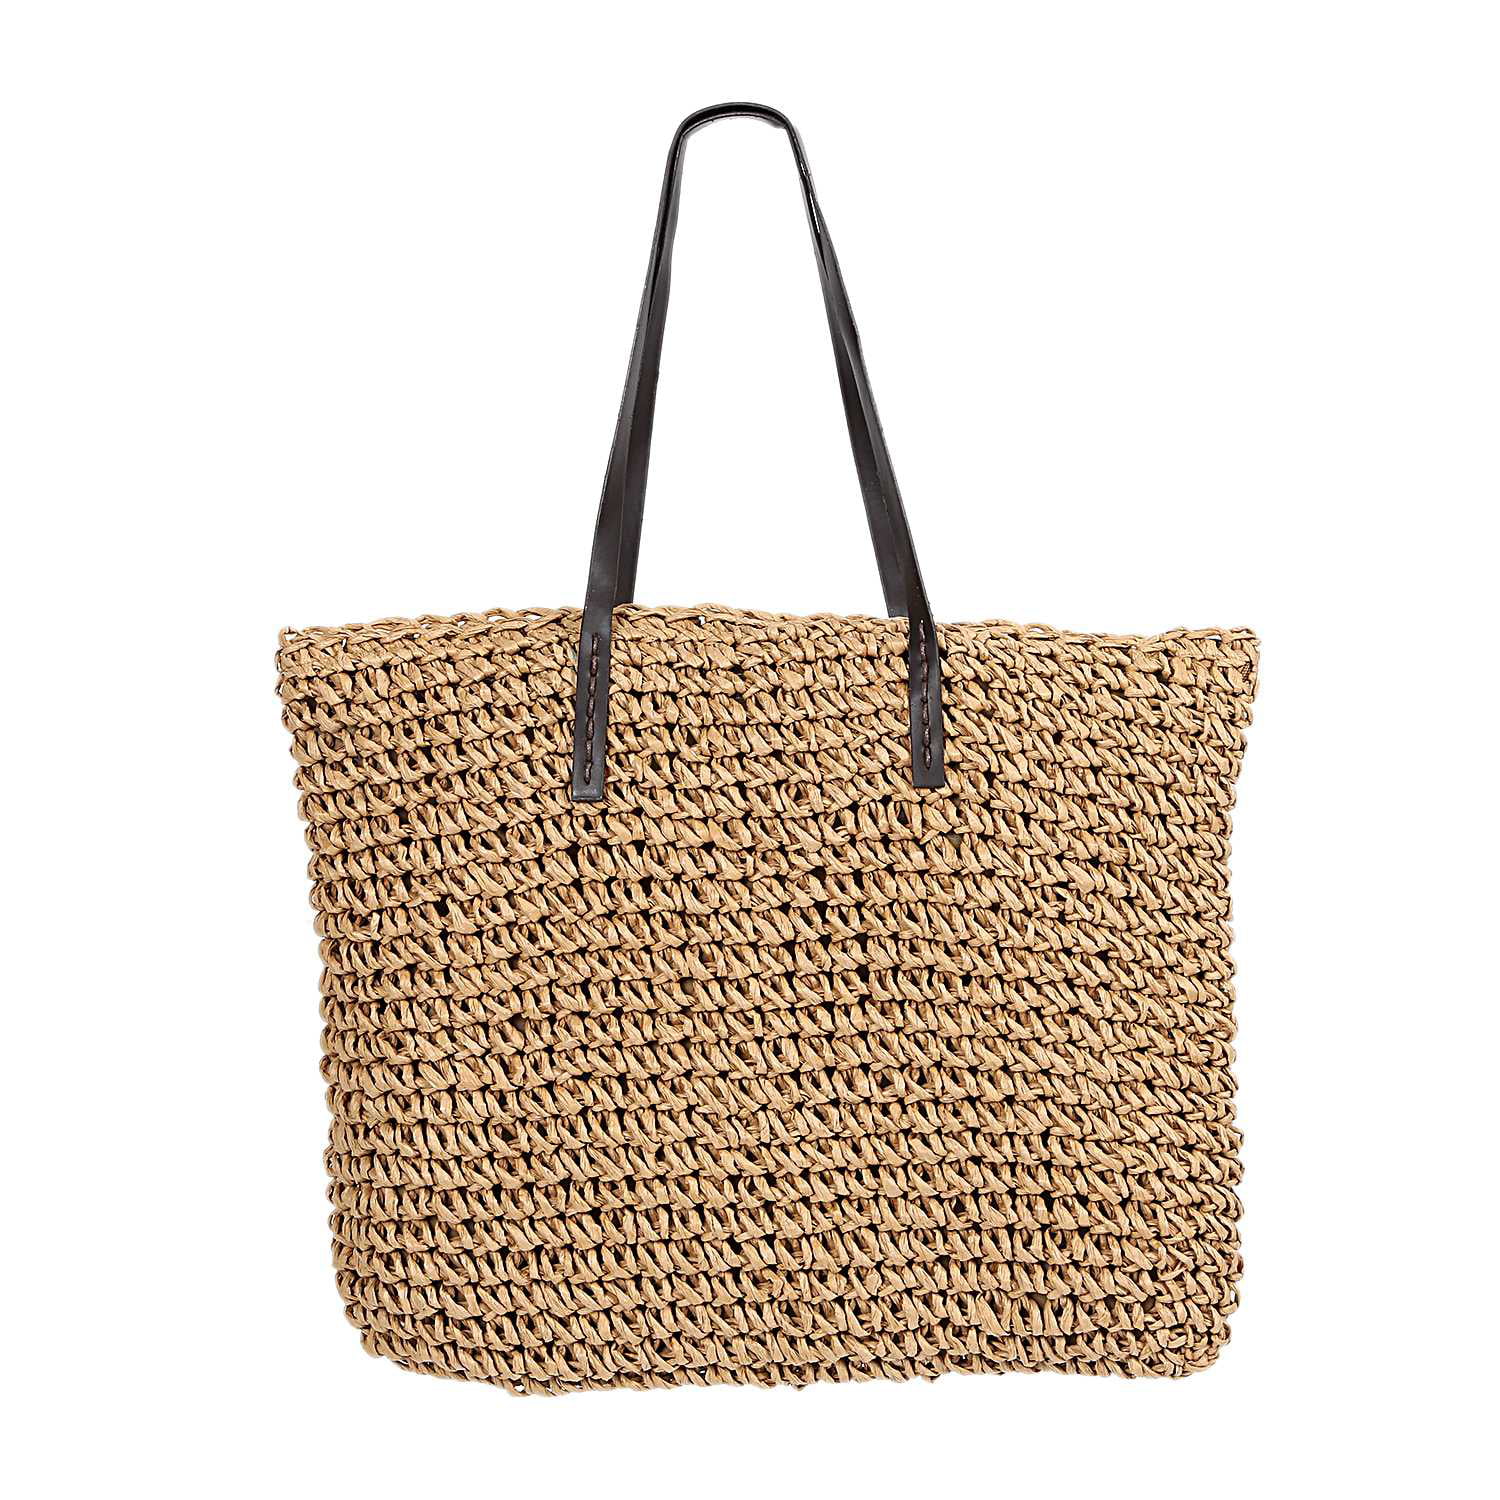 Women Handbag Bohemia Beach Bags Handmade Wicker Summer Tote Shoulder Straw Bags